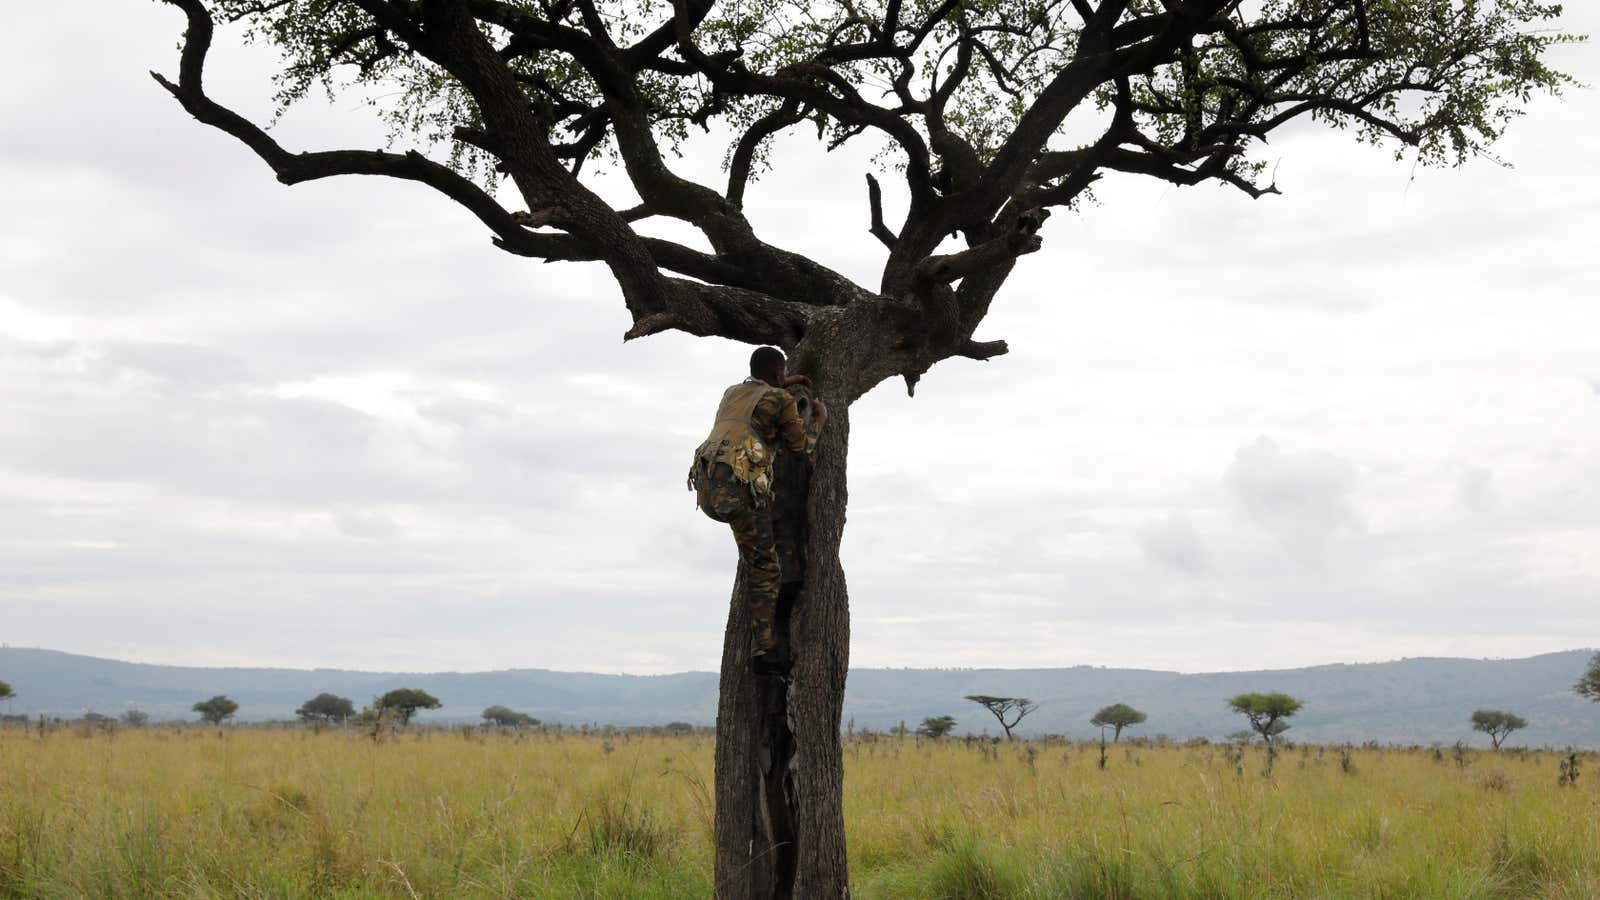 The Ruma National park, Nyanza province, western Kenya